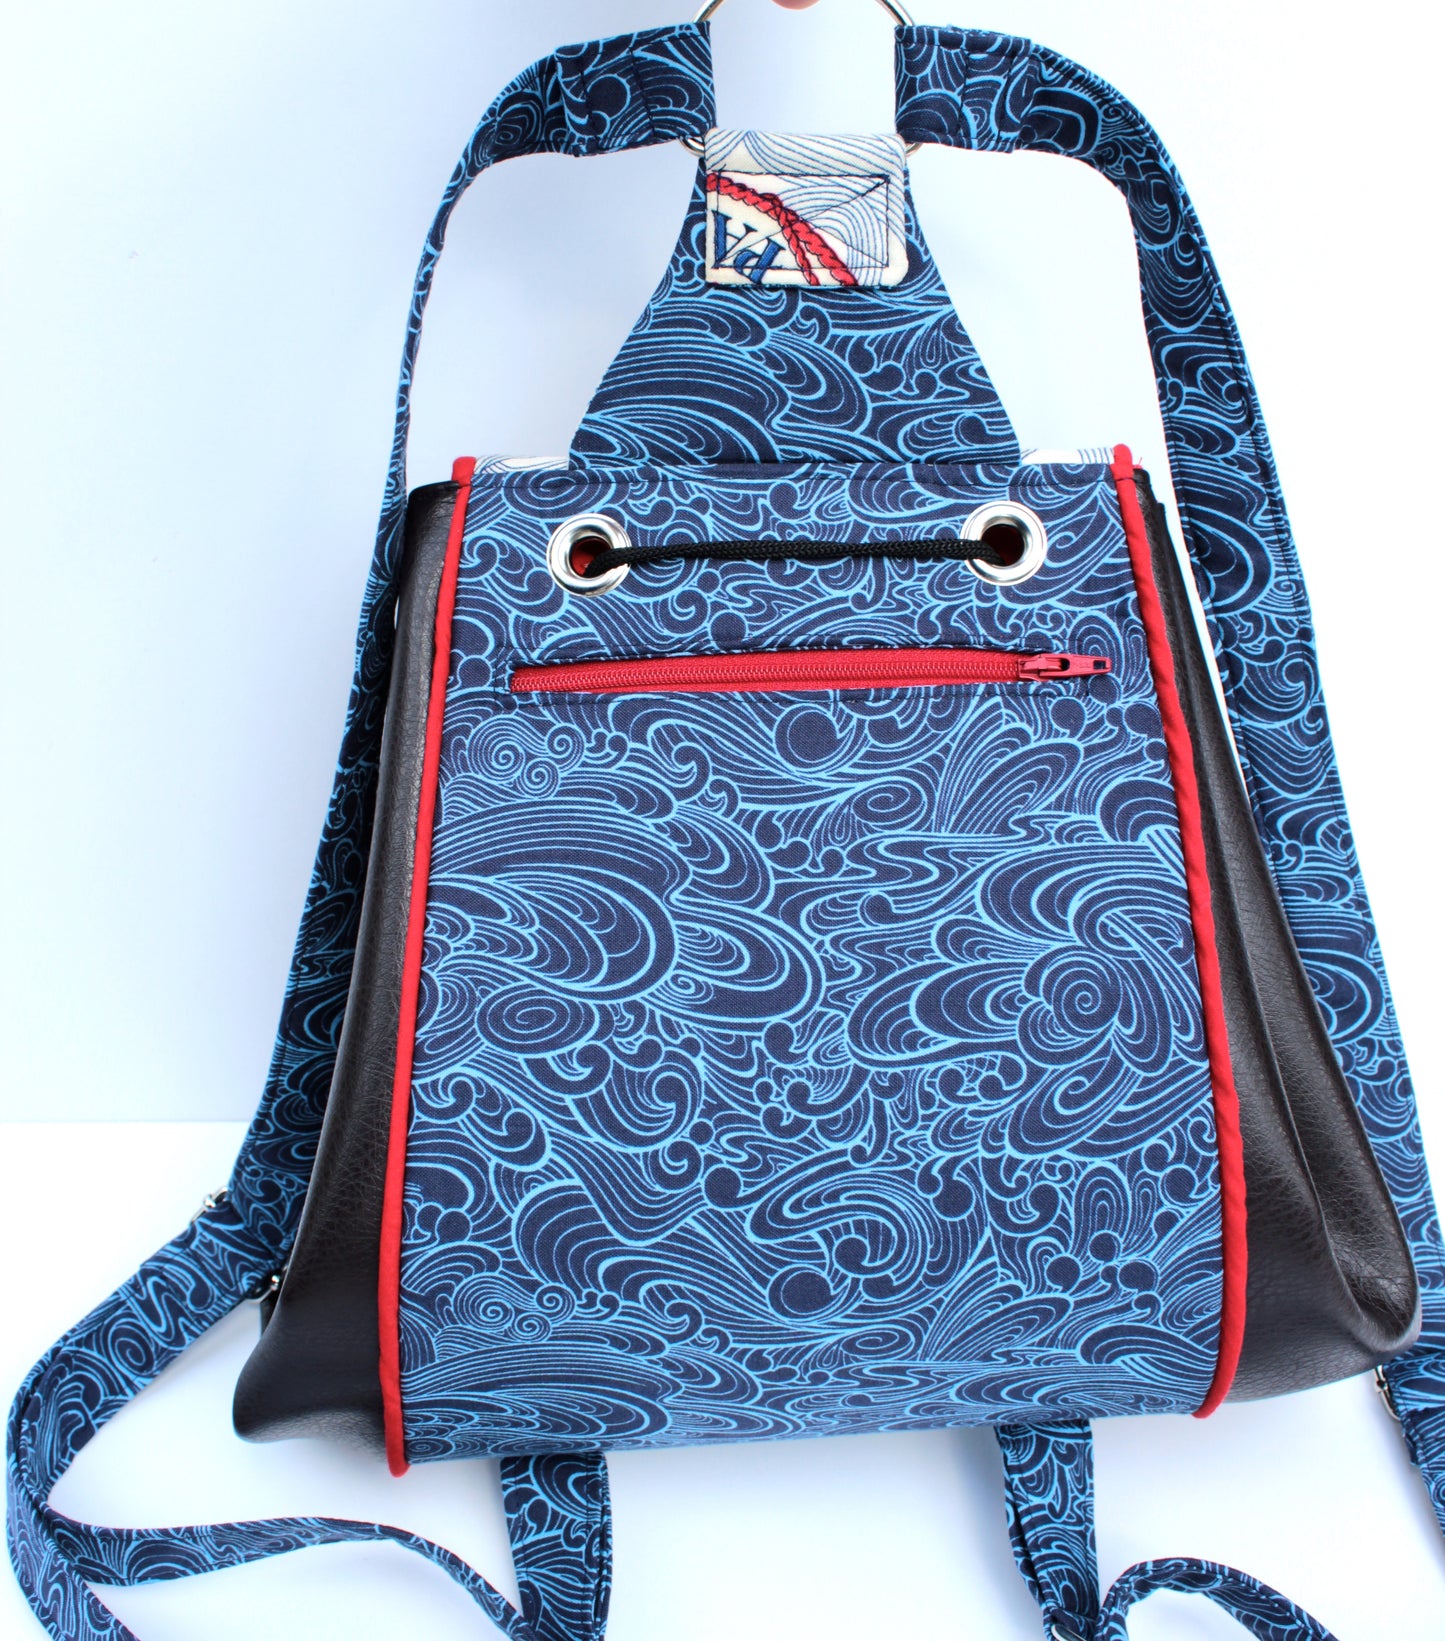 Batala Backpack - PDF Sewing Pattern